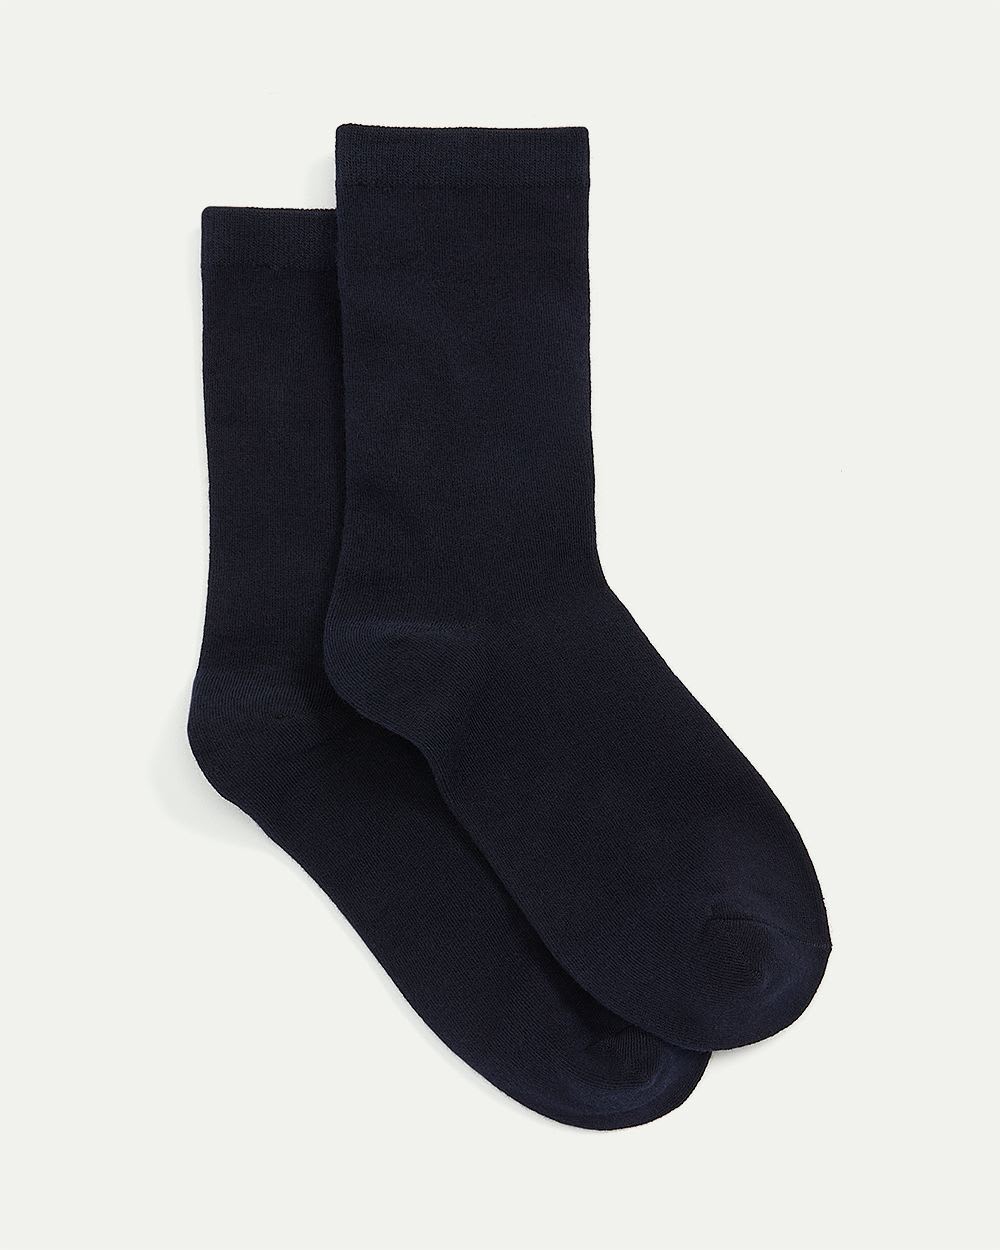 Straight-Up Solid Socks, set of 1